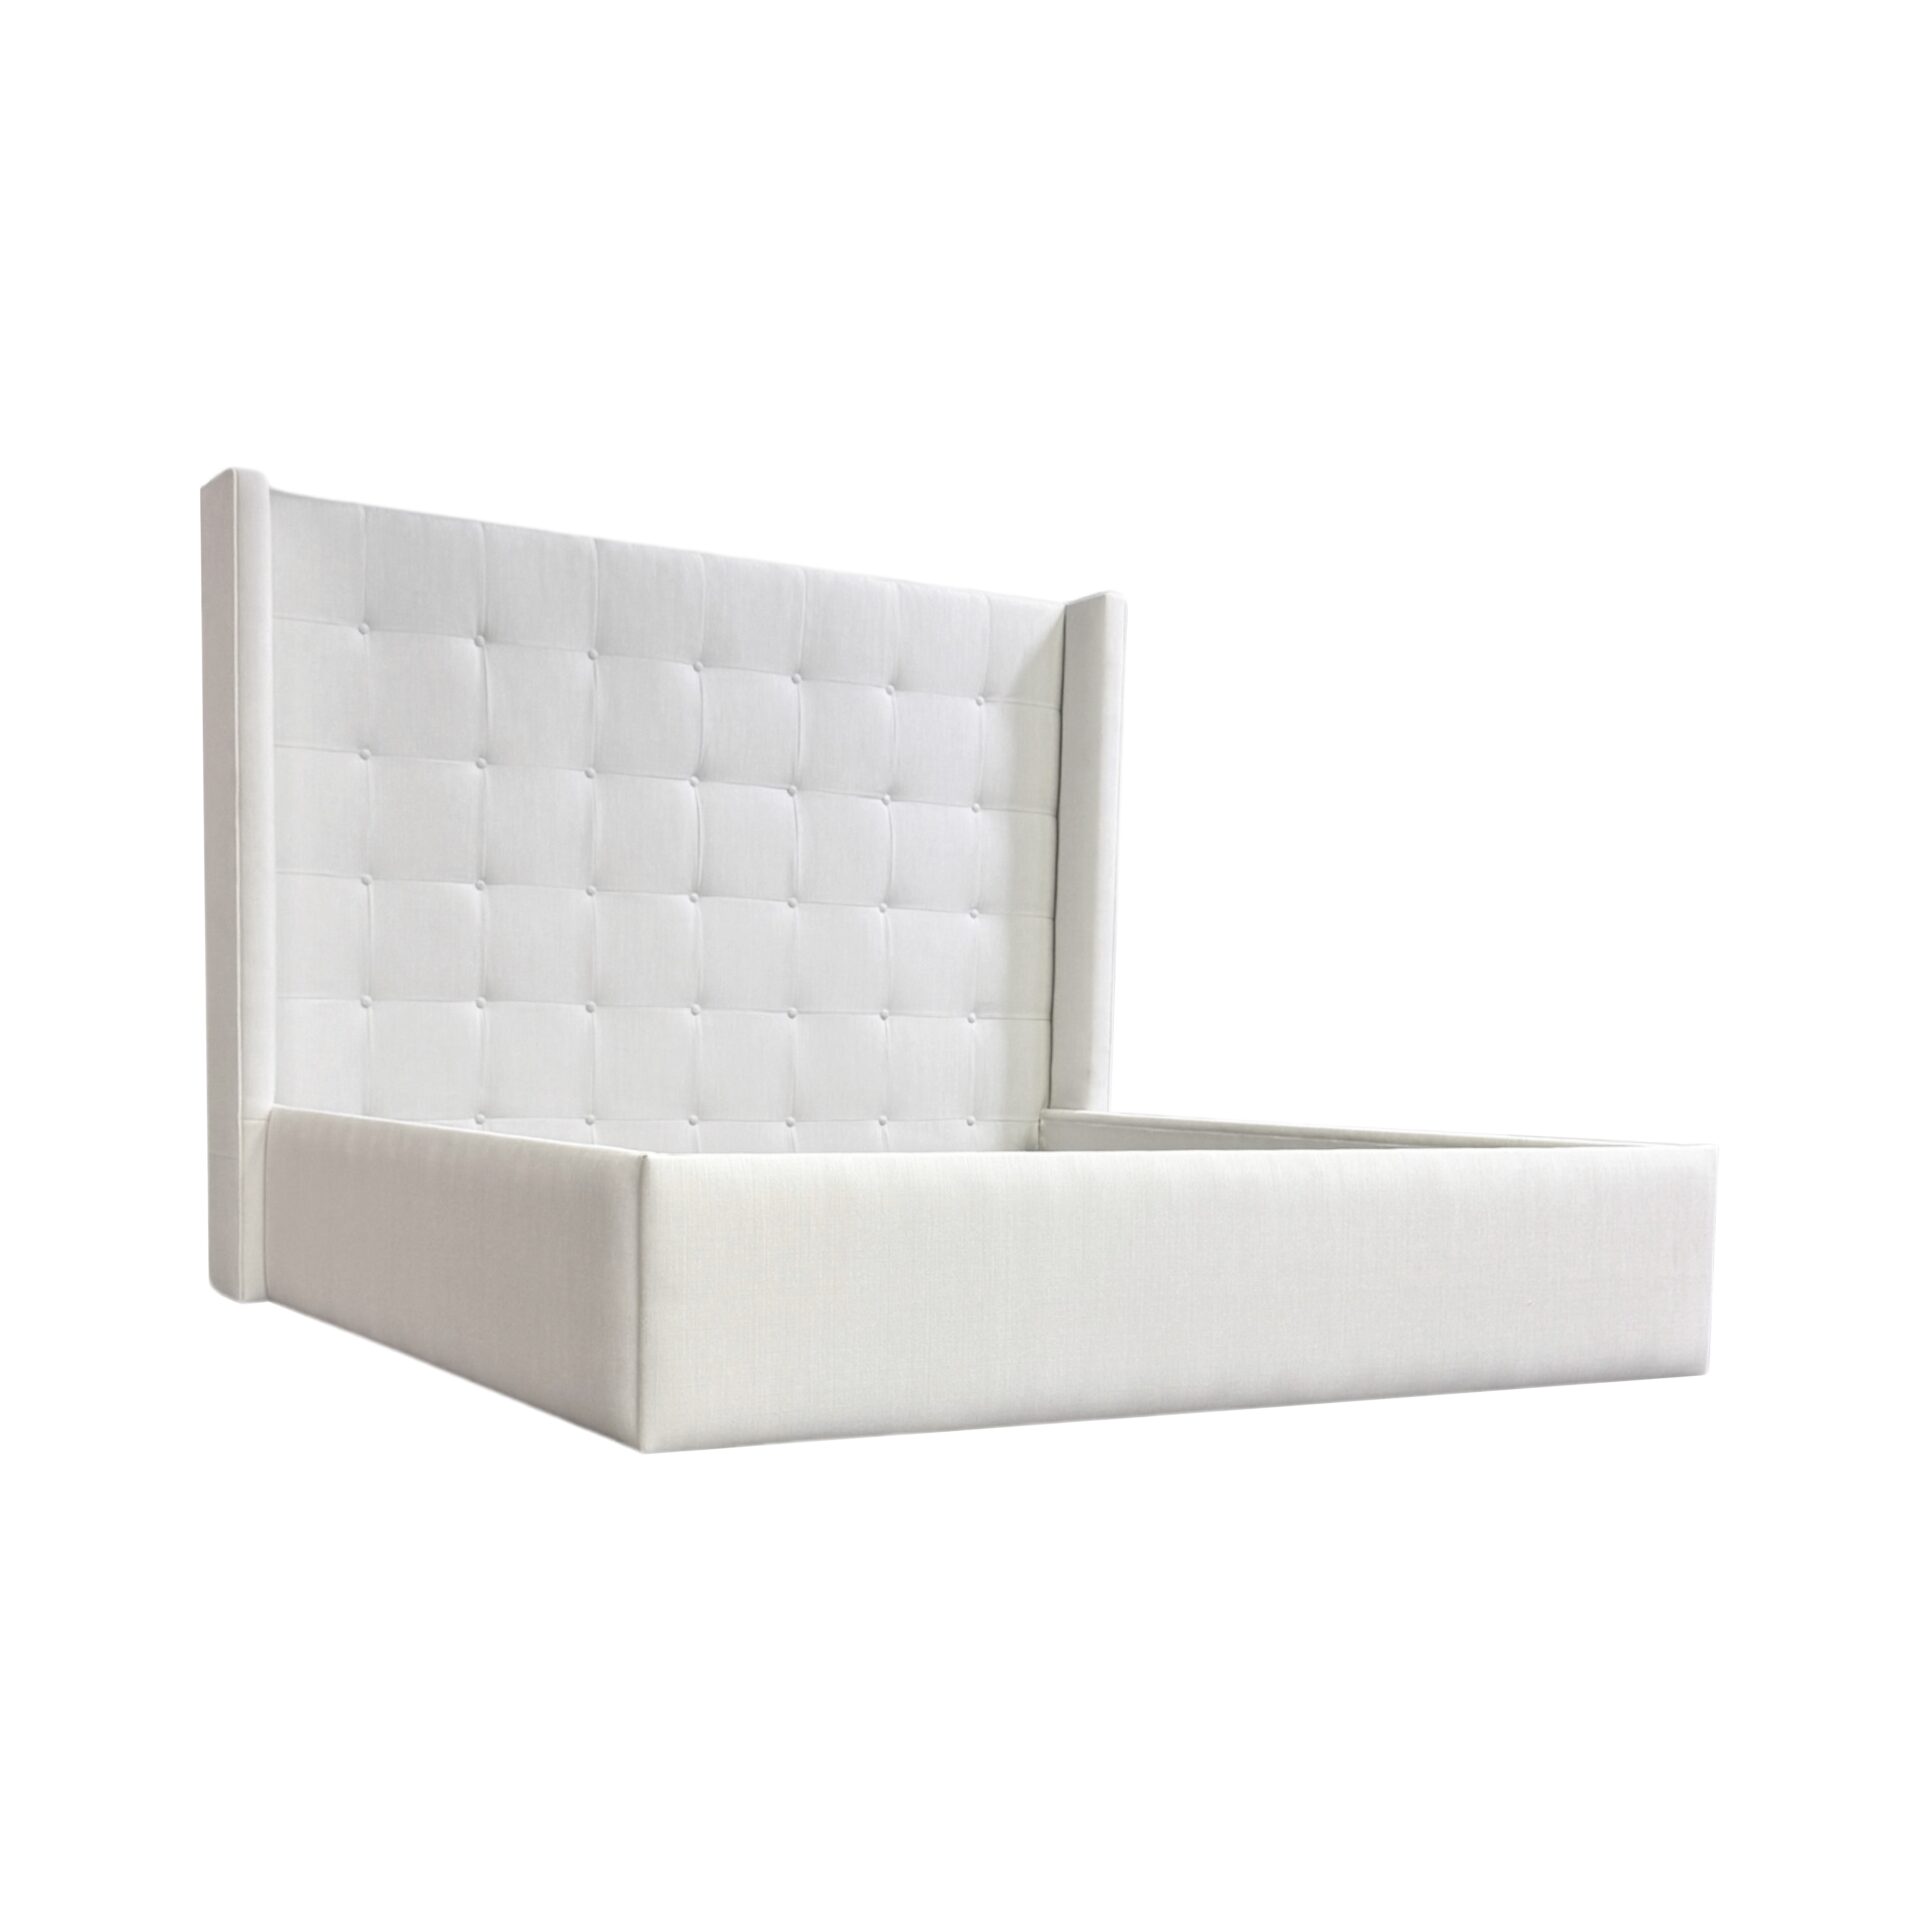 HUNTLEY Freestanding Upholstered Bed, Luxury Furniture - Blend Home Furnishings